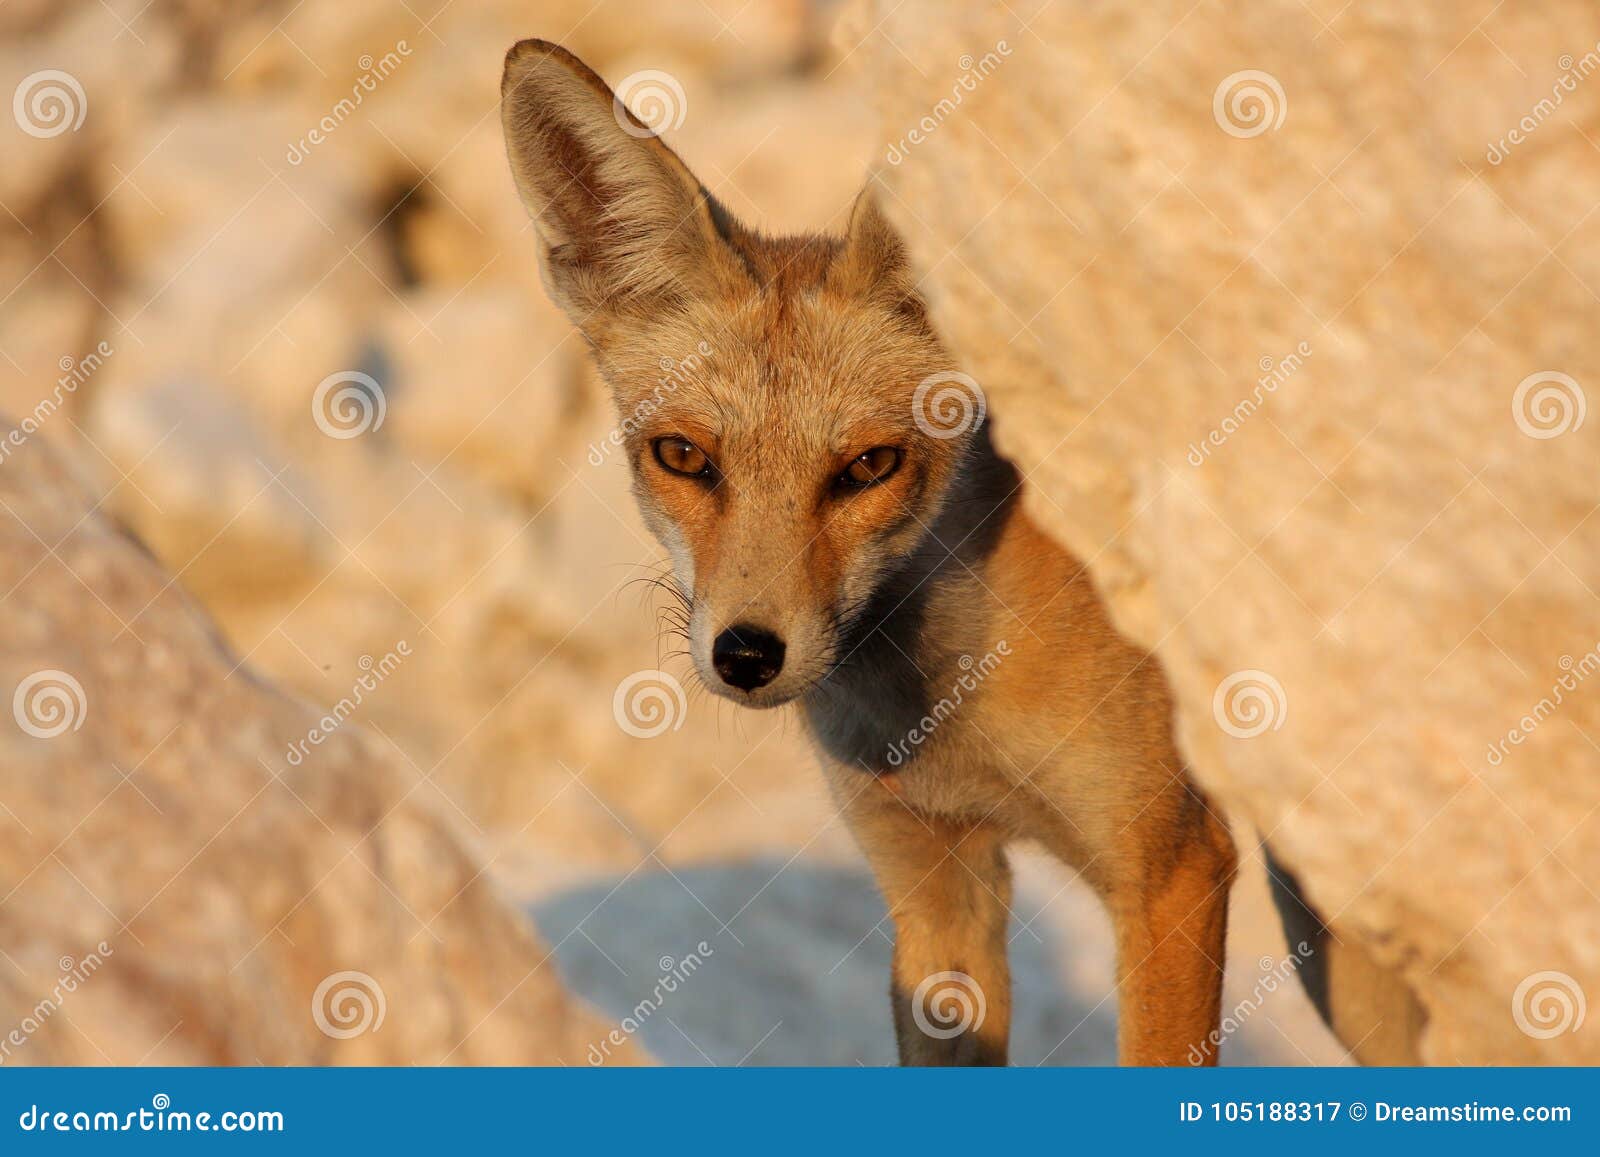 Sunny fox